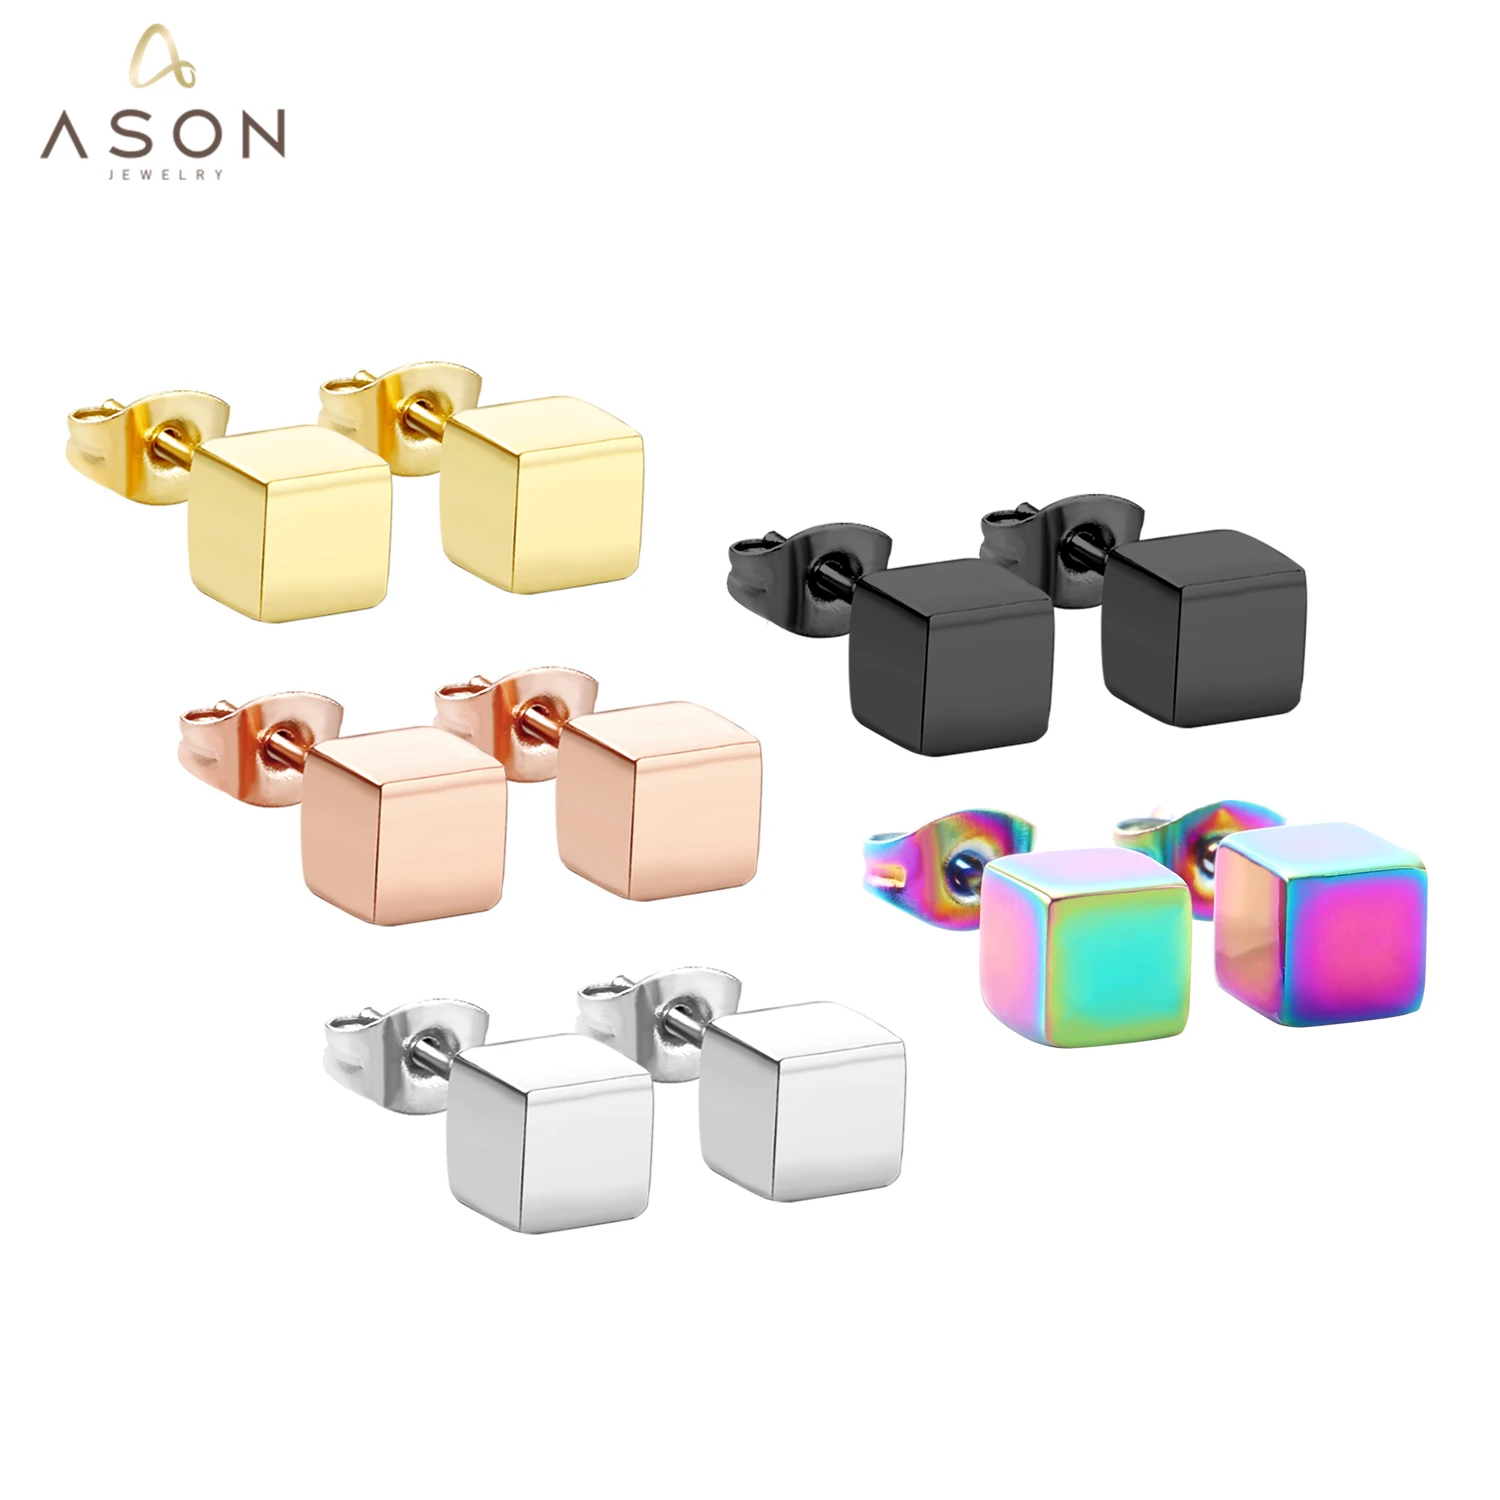 ASONSTEEL Trendy Square Earrings Smooth Cube Piercing Stud Earring Stainless Steel for Women Girl Geometric Jewelry Accessories